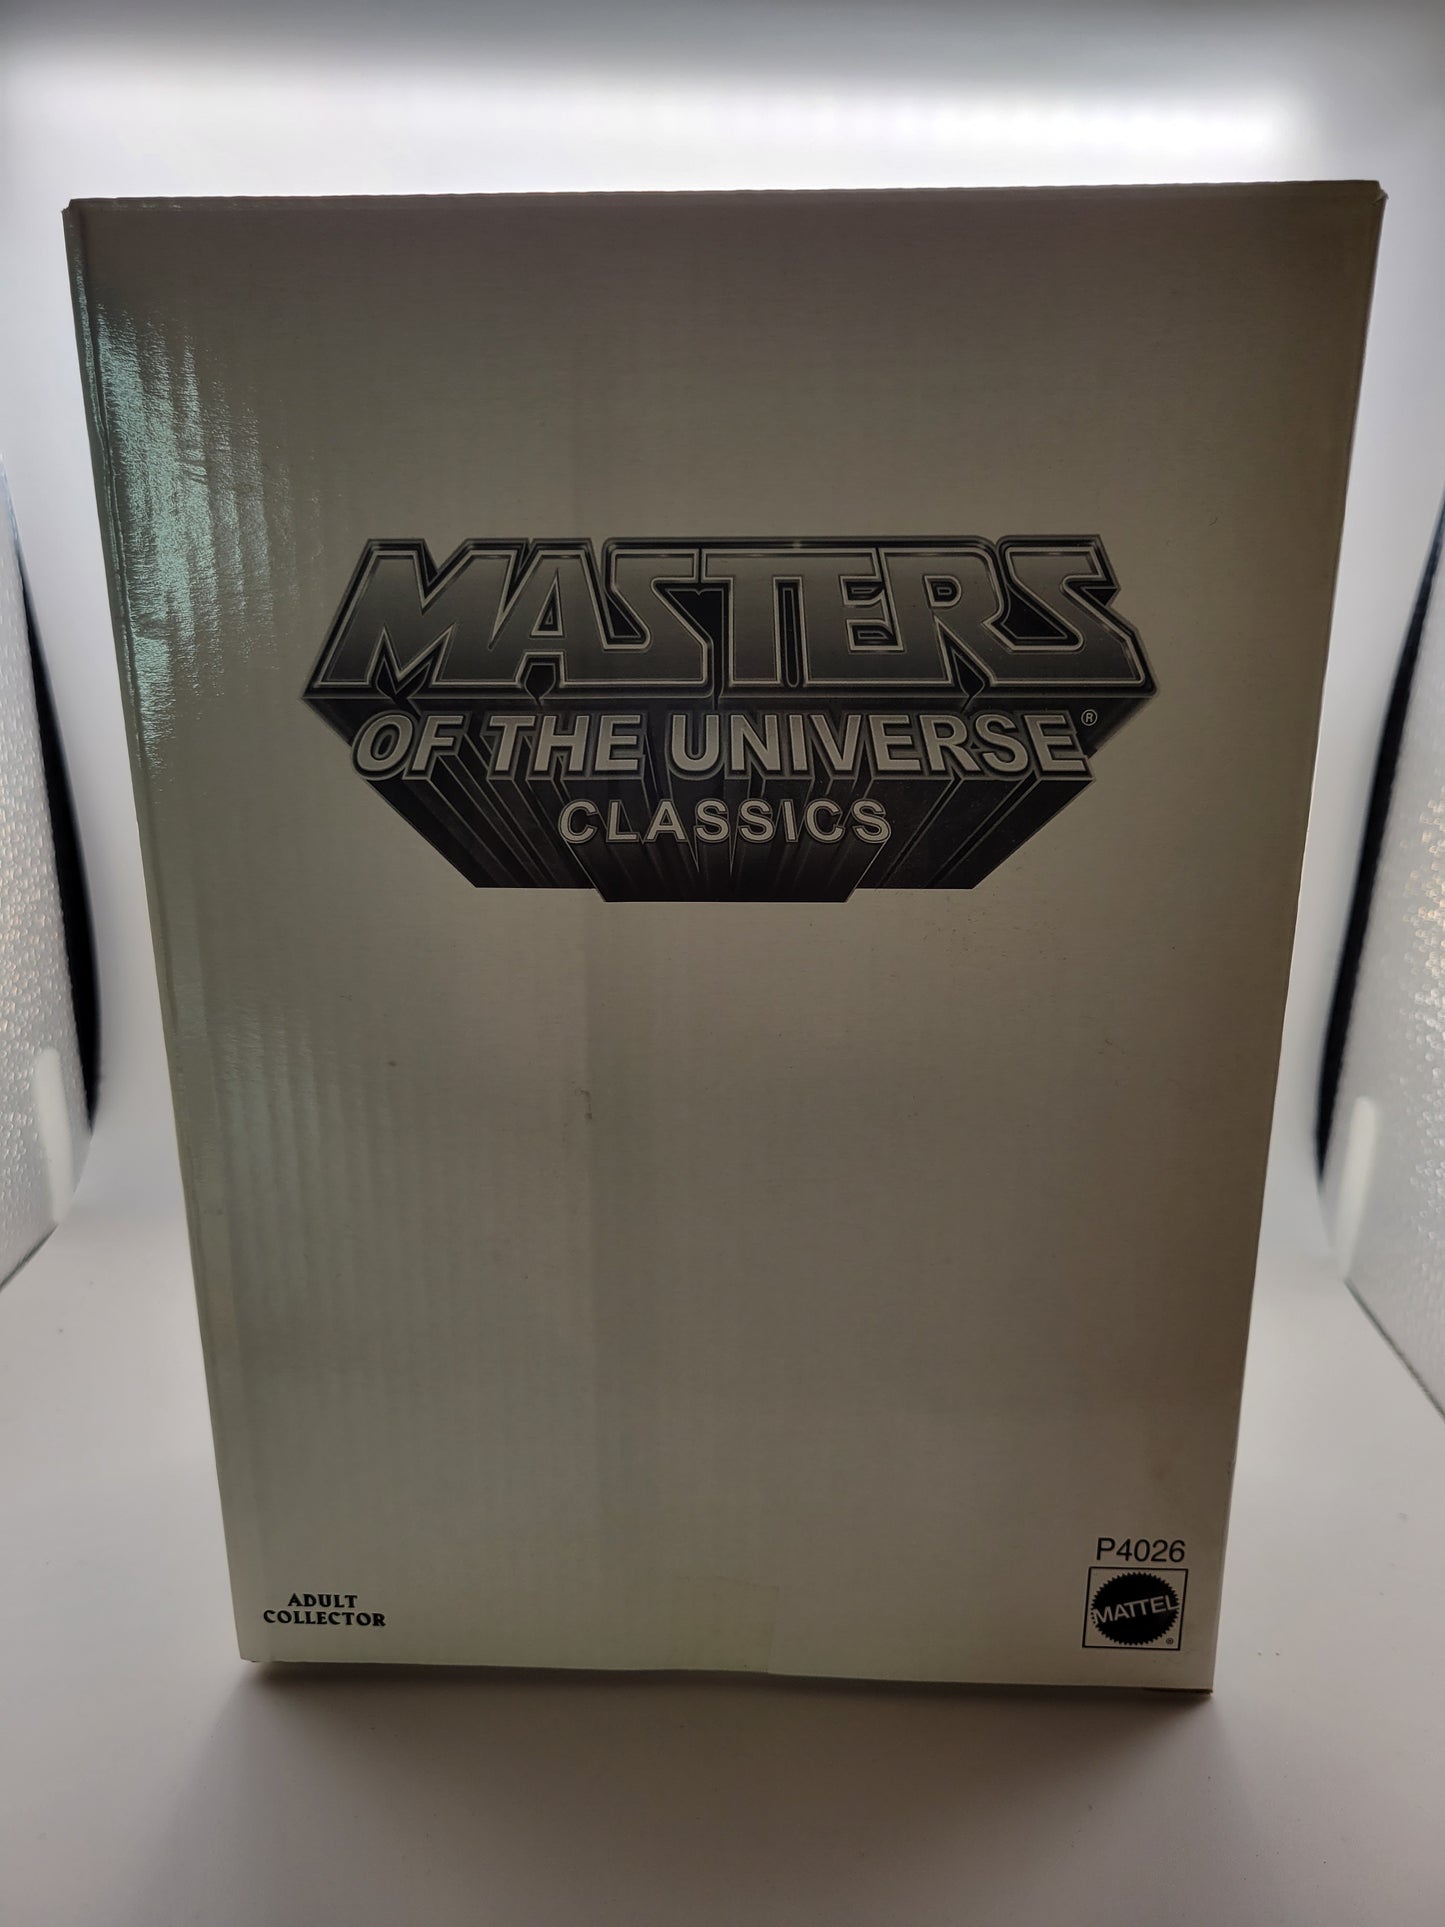 Mattel 2009 Matty Collector Masters of the Universe Classics Zodak Action Figure